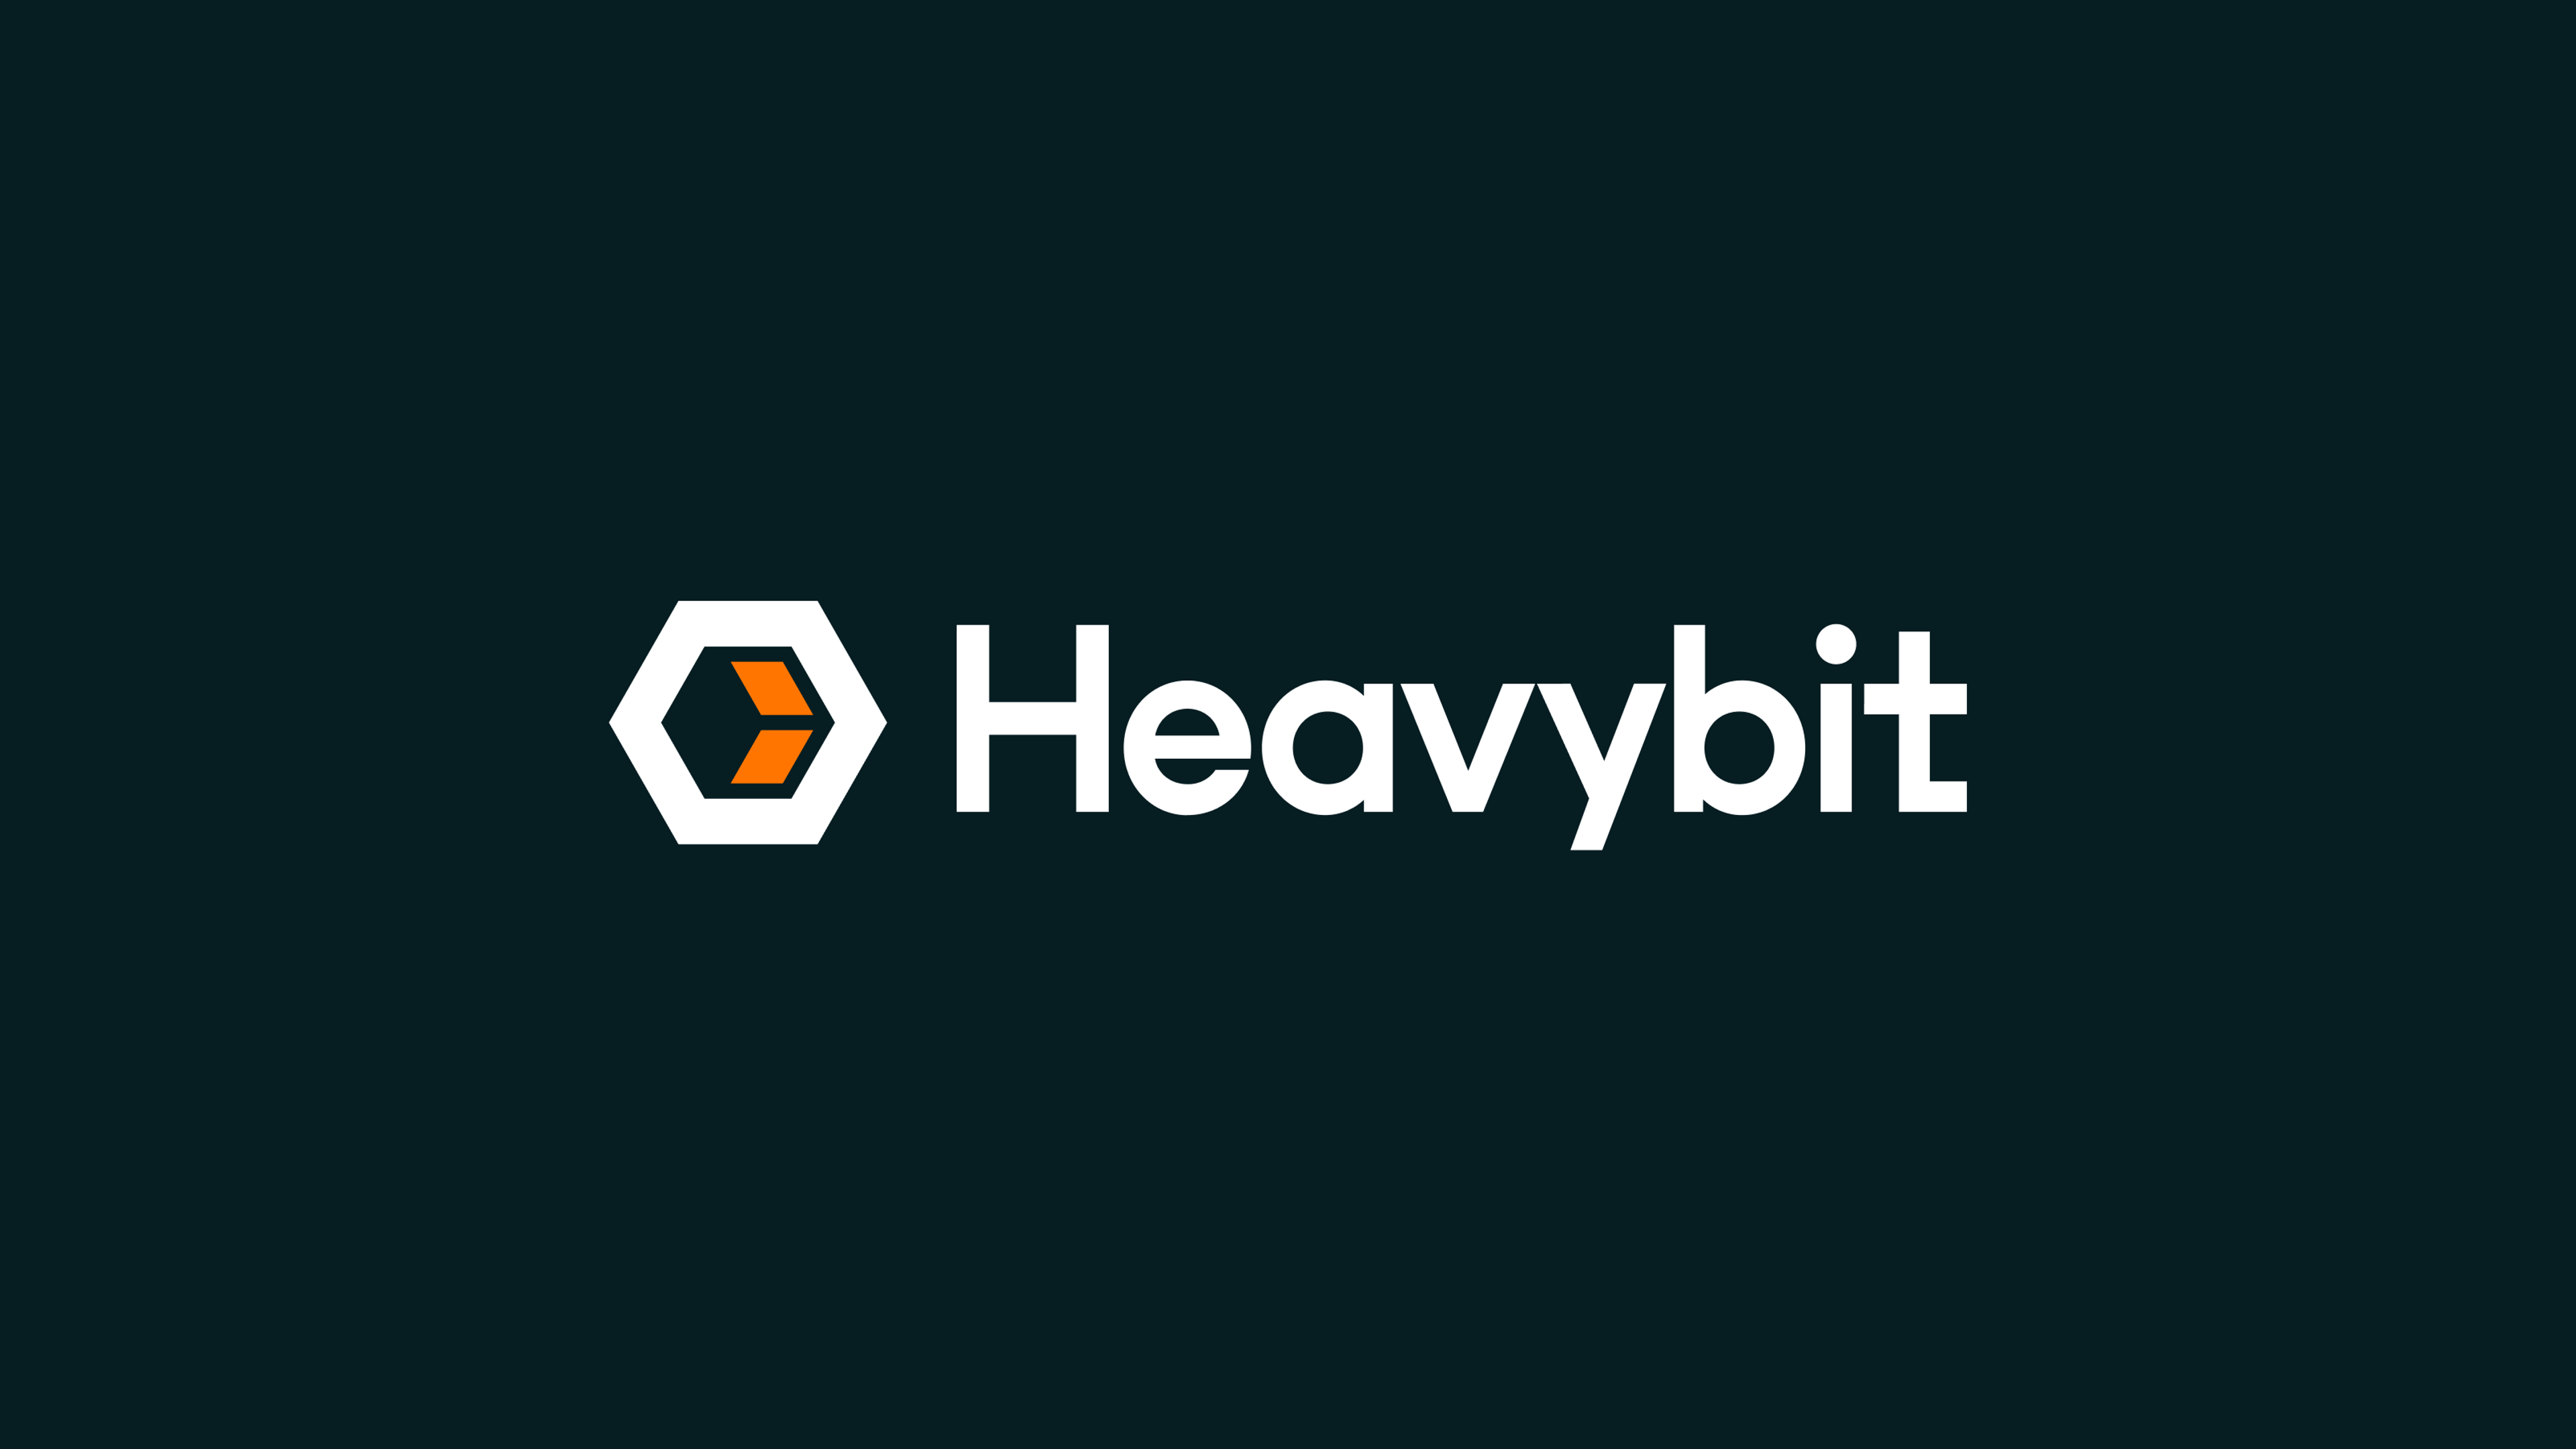 Heavybit